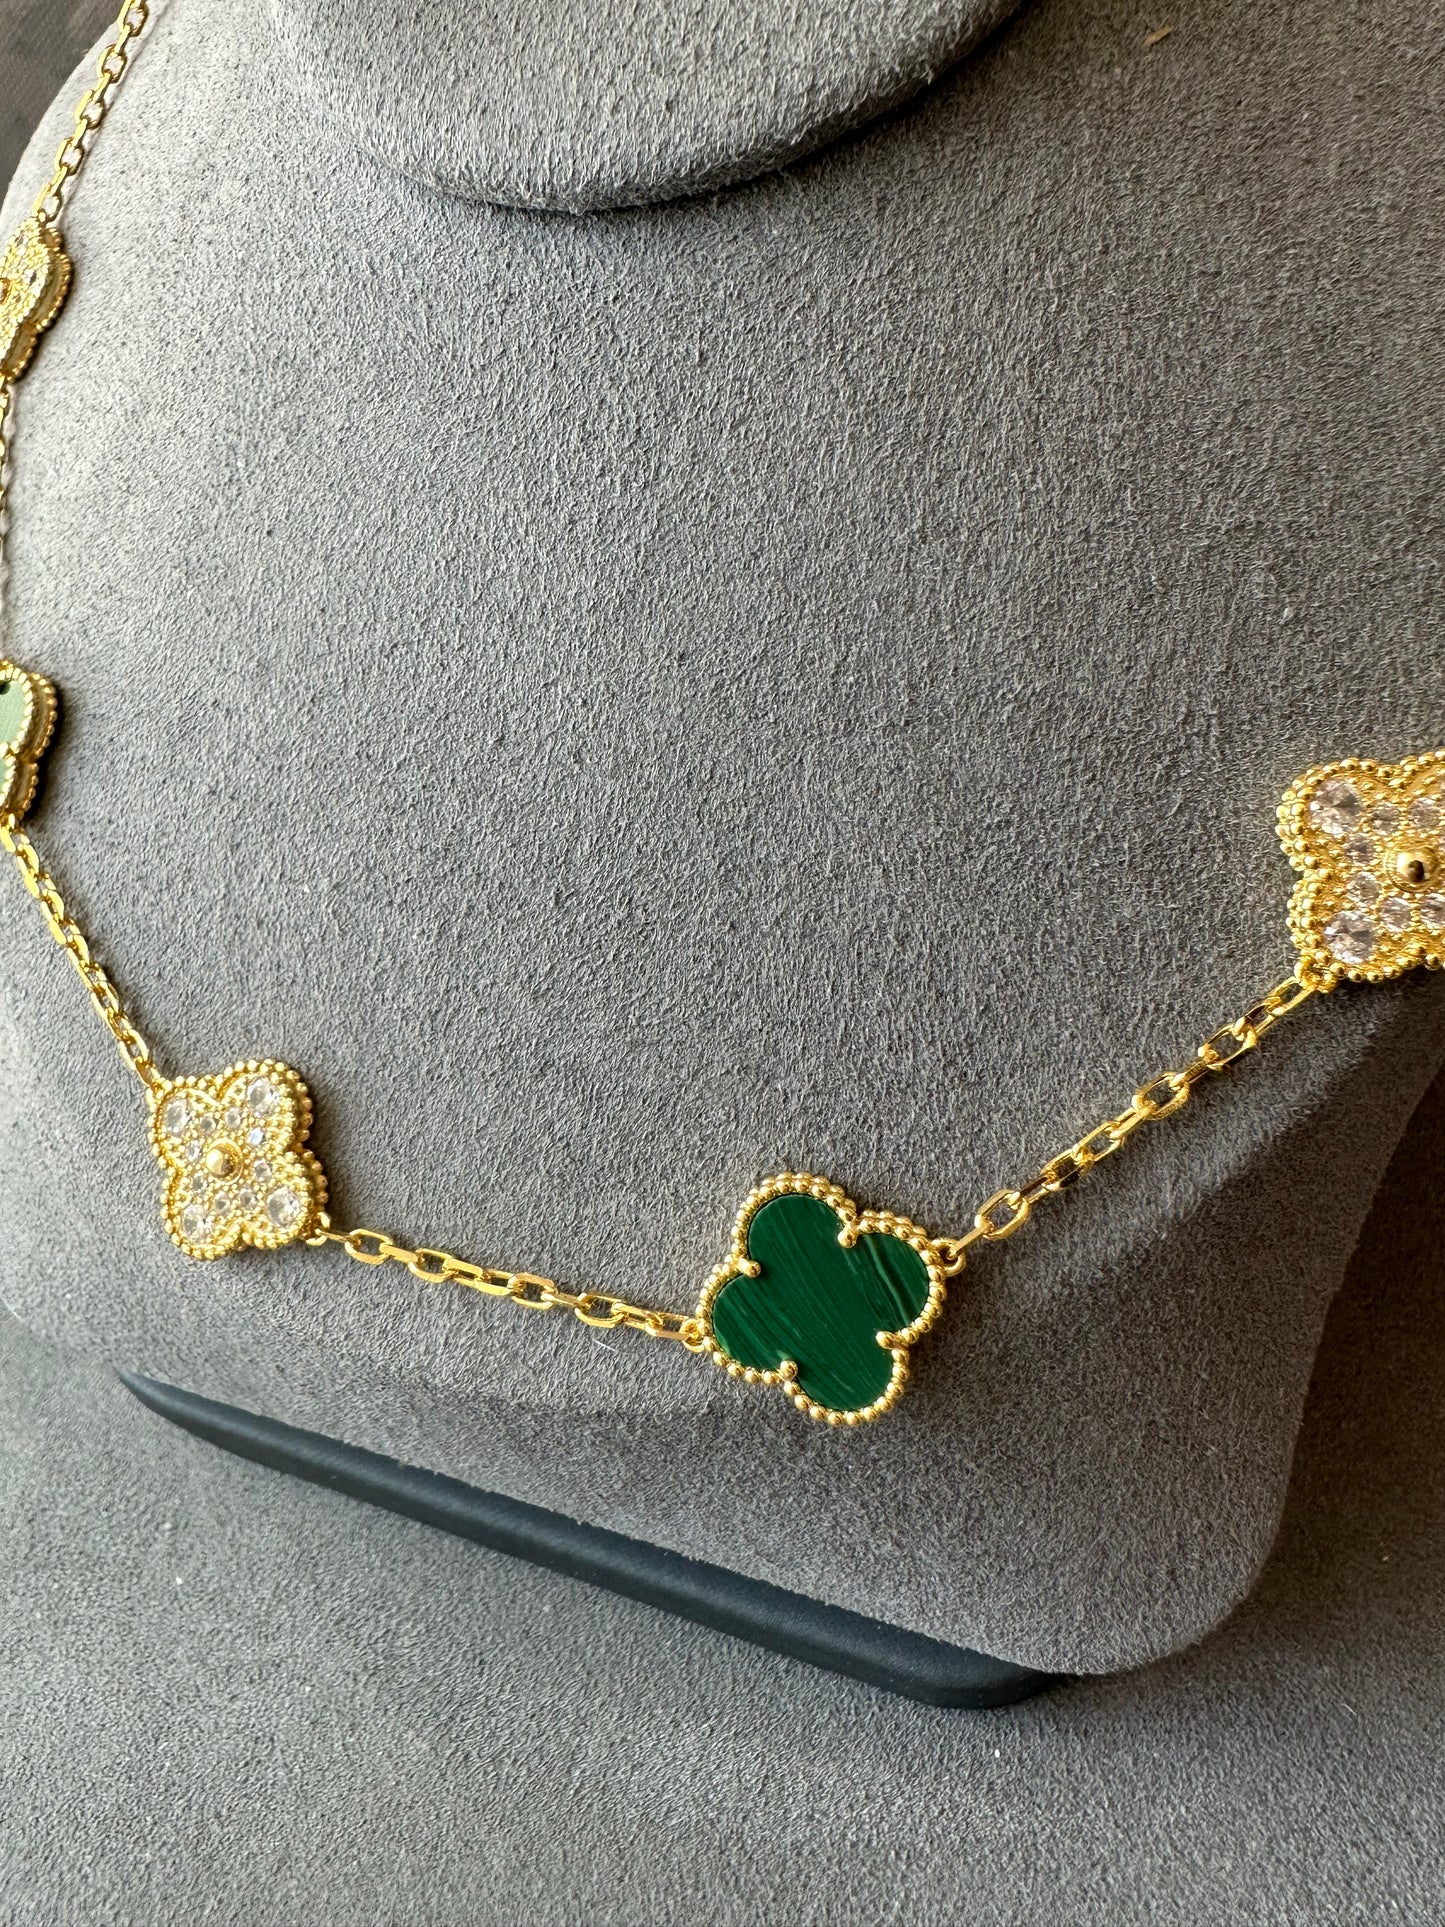 Green malachite 10 motif cz clover necklace 925 silver 18k gold plated 42 cm long clover size 15mm - ParadiseKissCo